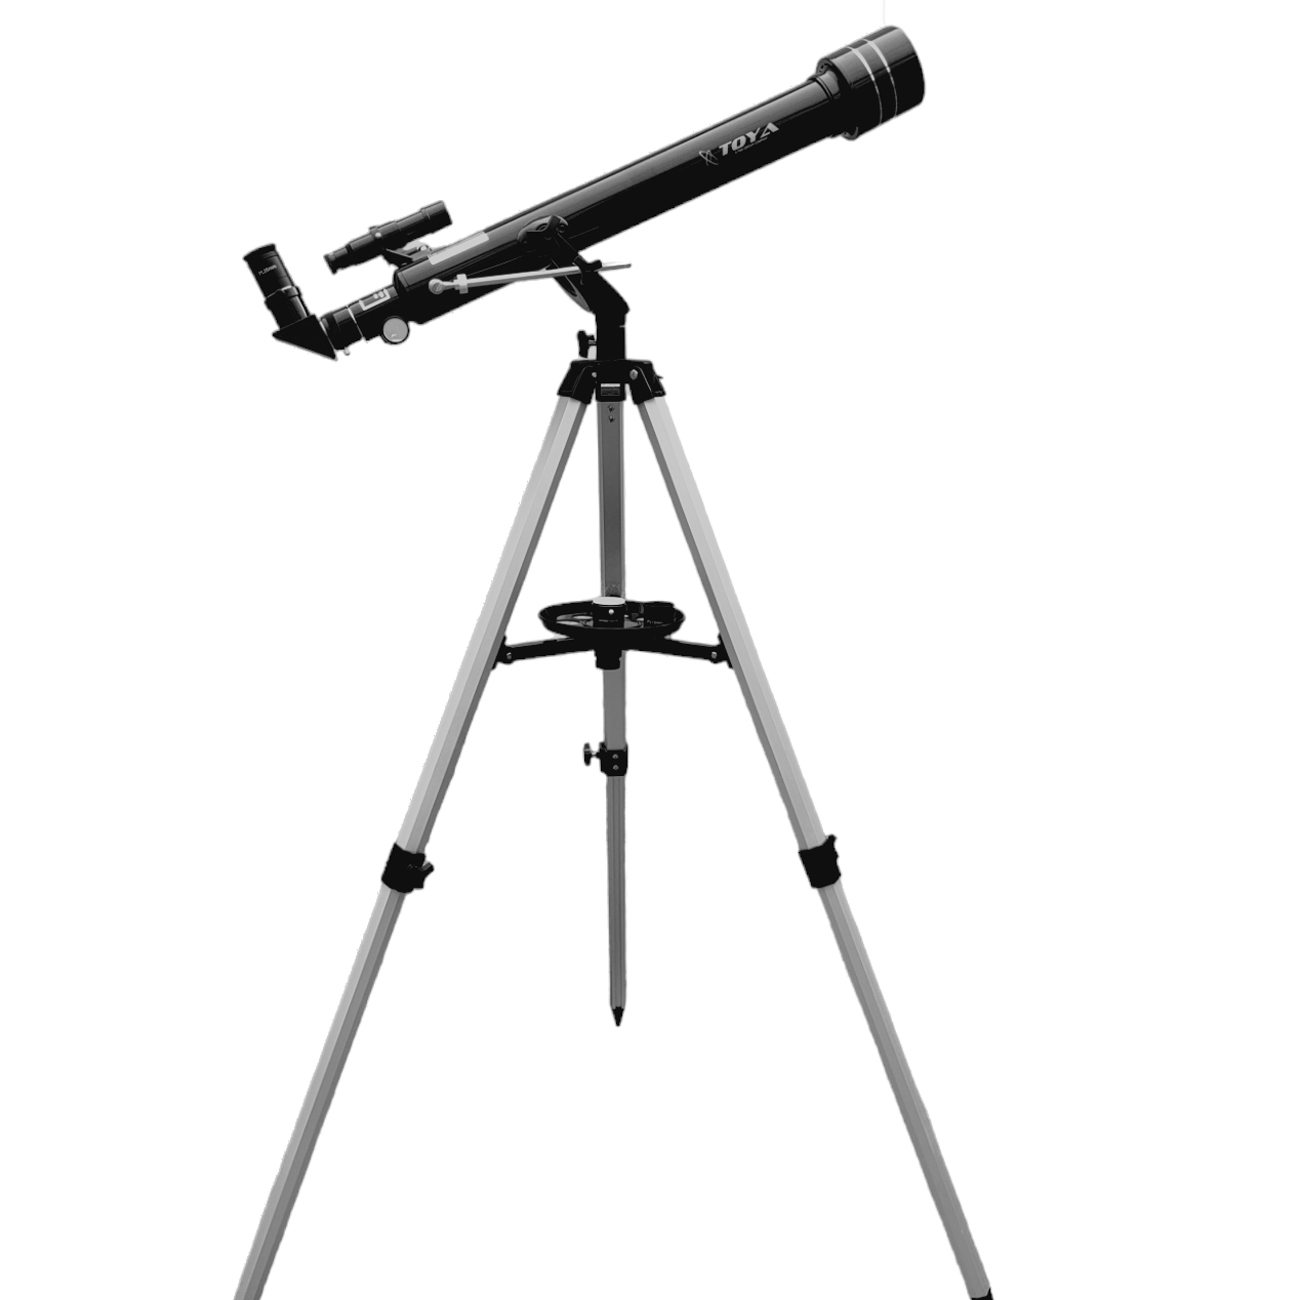 Telescópio Refrator 60mm Toya Galaxy Ultraoptec HRT60L - 675X